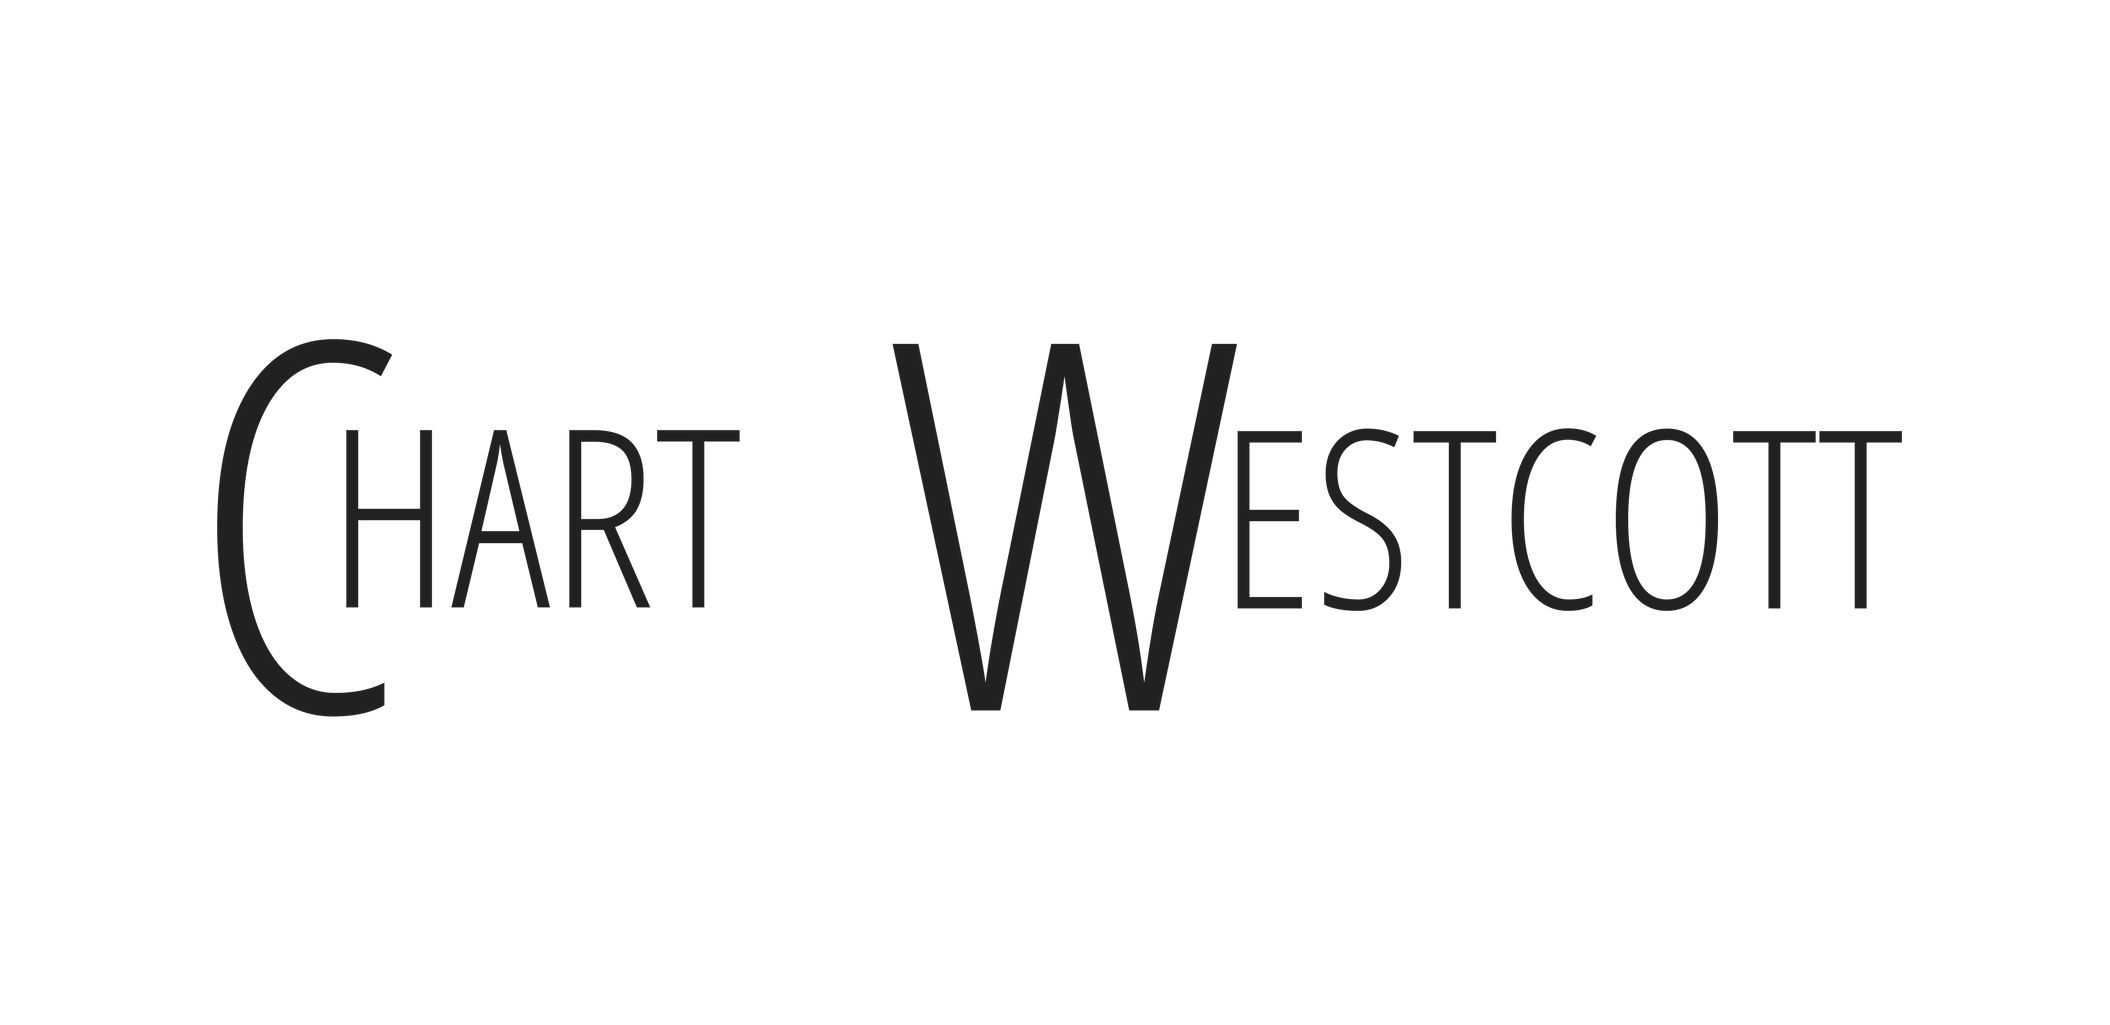 Chart Westcott | Philanthropy